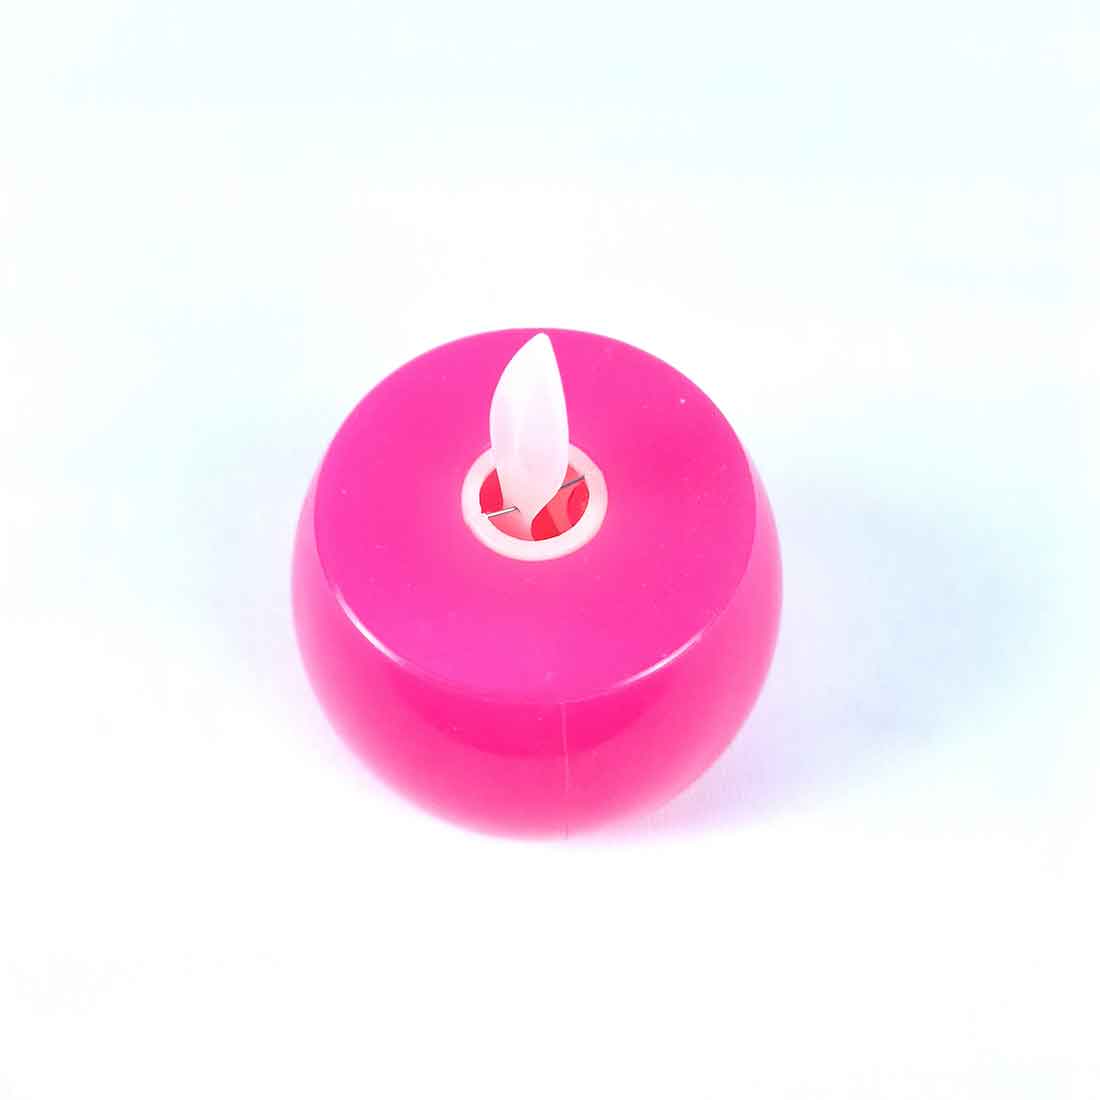 LED Candle -  For Diwali | Christmas | Wedding & Home Decor - 3 Inches - ApkaMart